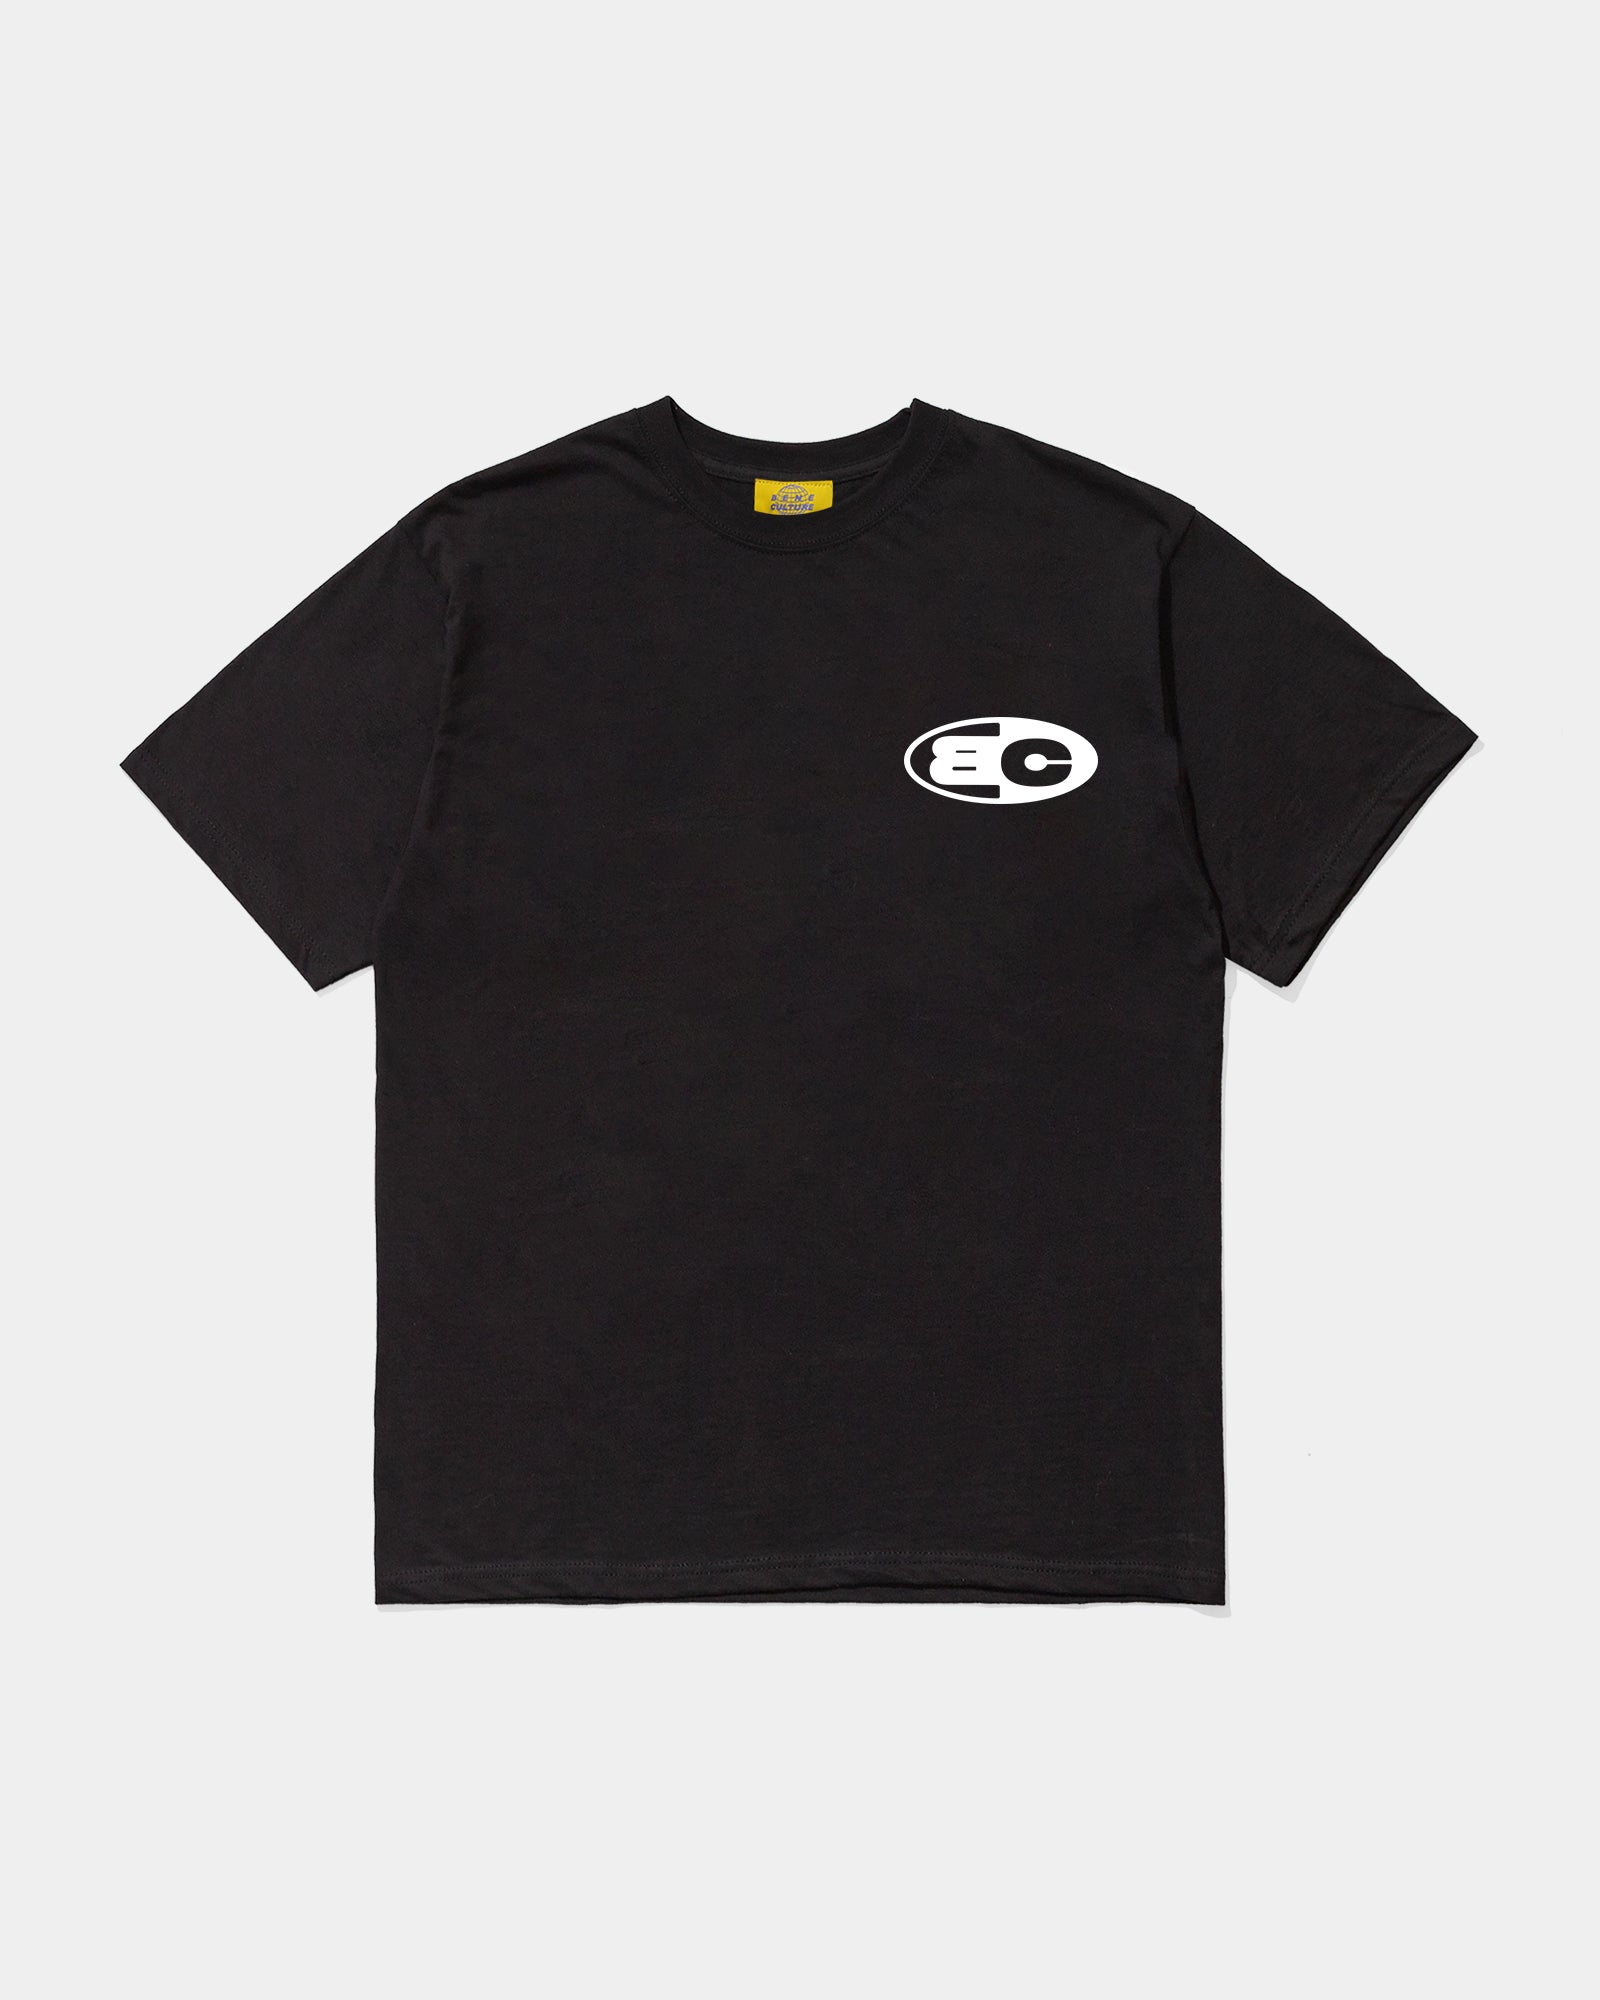 Cult T-Shirt (Black)